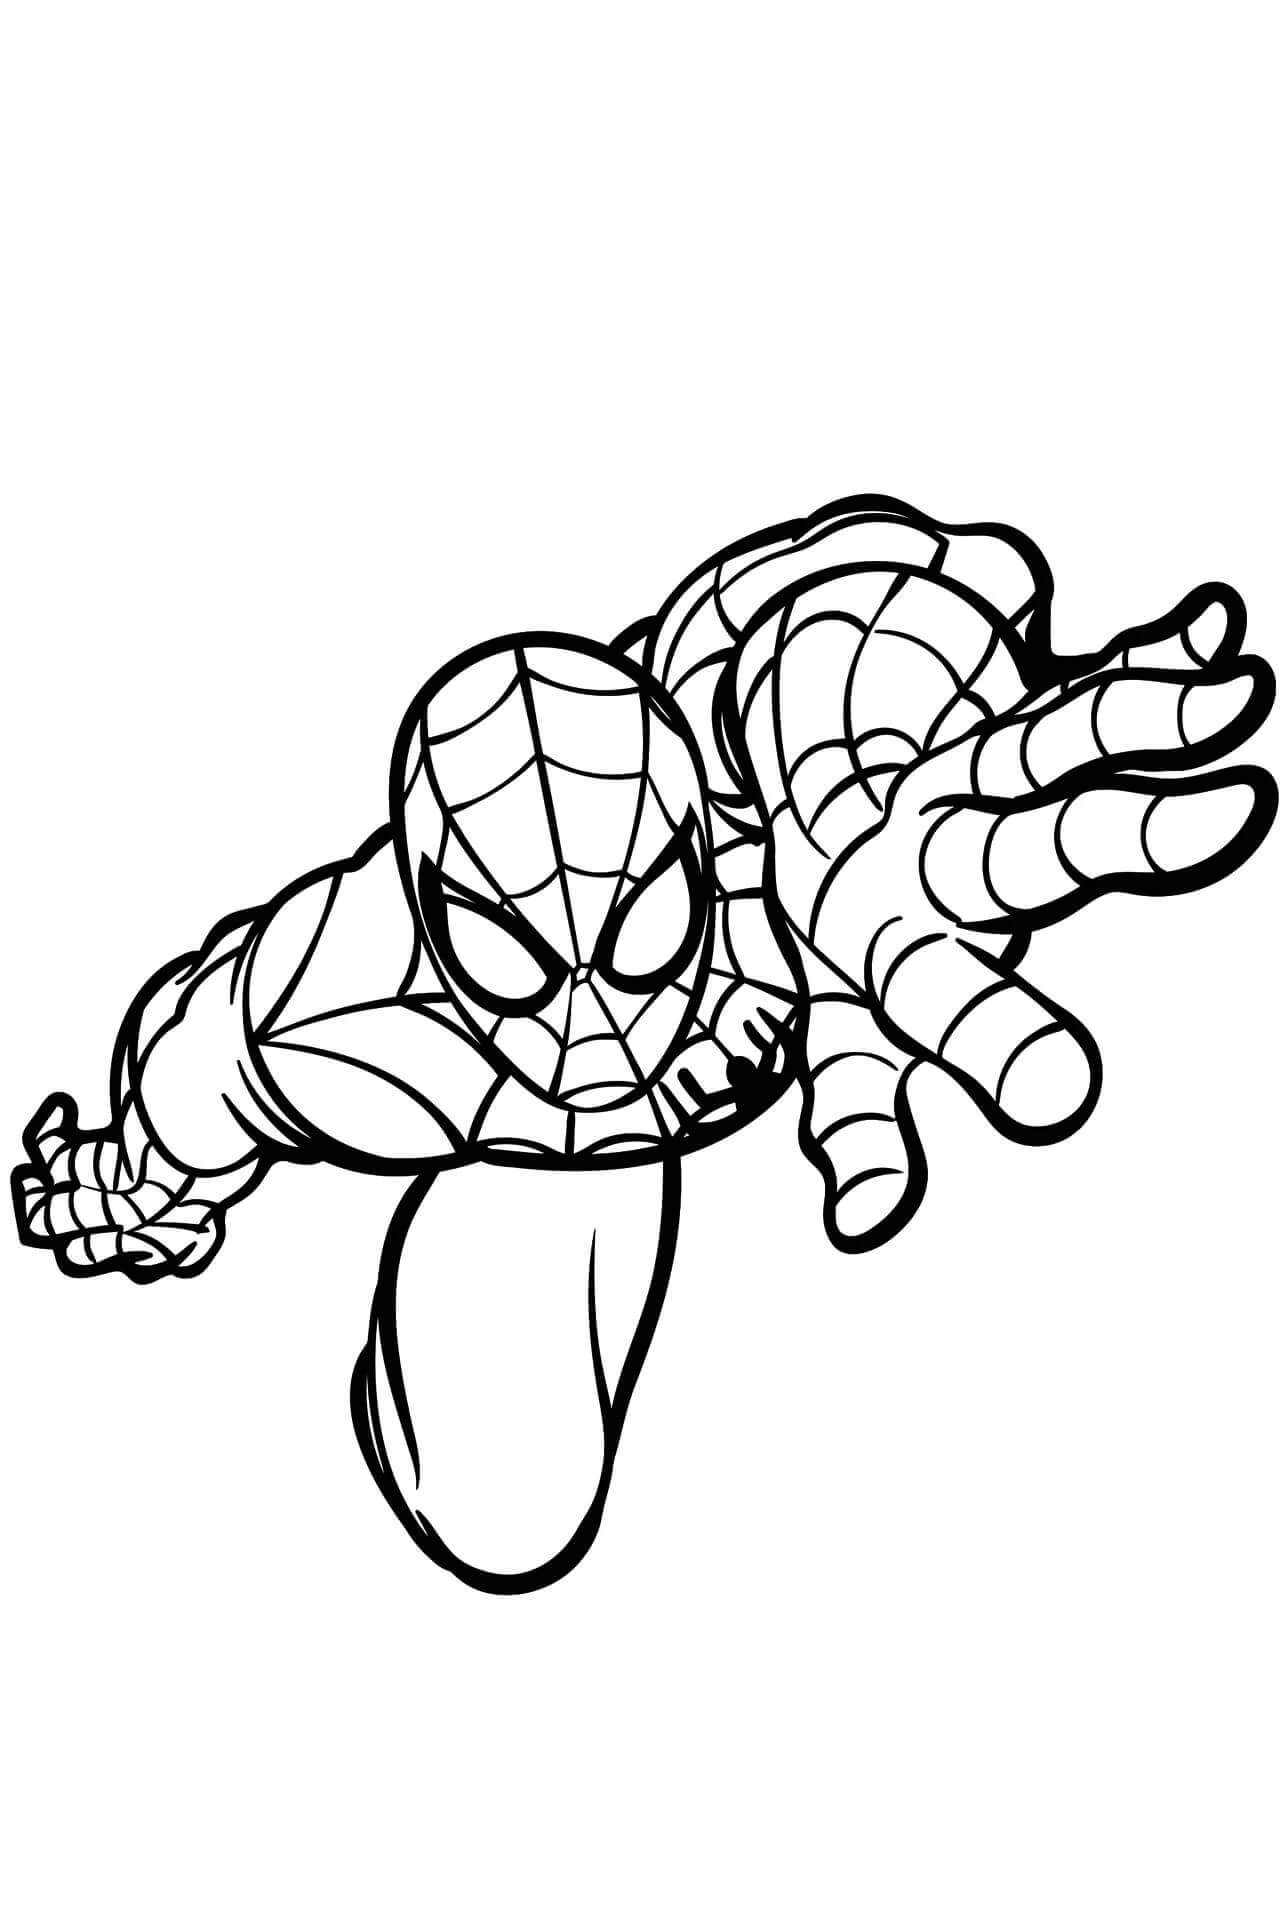 Spiderman snel rennen